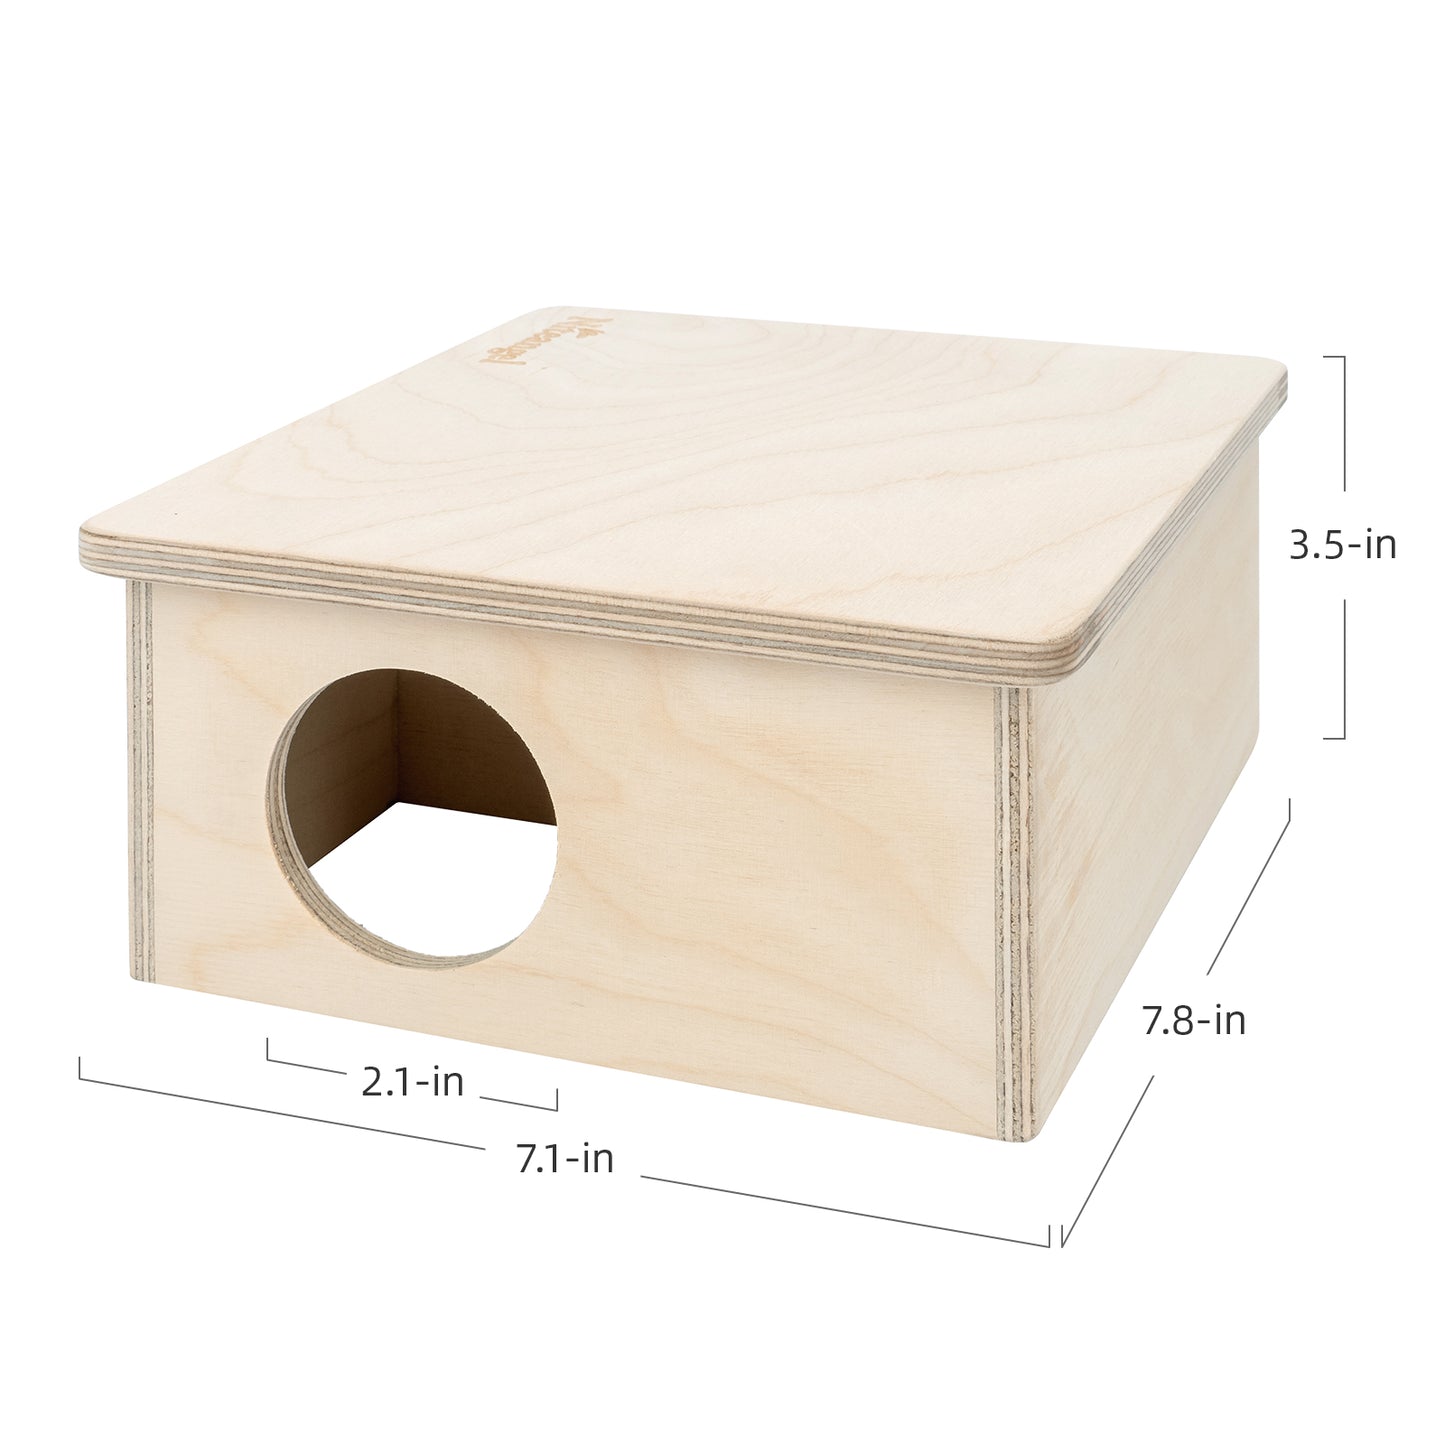 Niteangel Birch Chamber-Maze Hamster Hideout - Small Pets Woodland House Habitats Decor